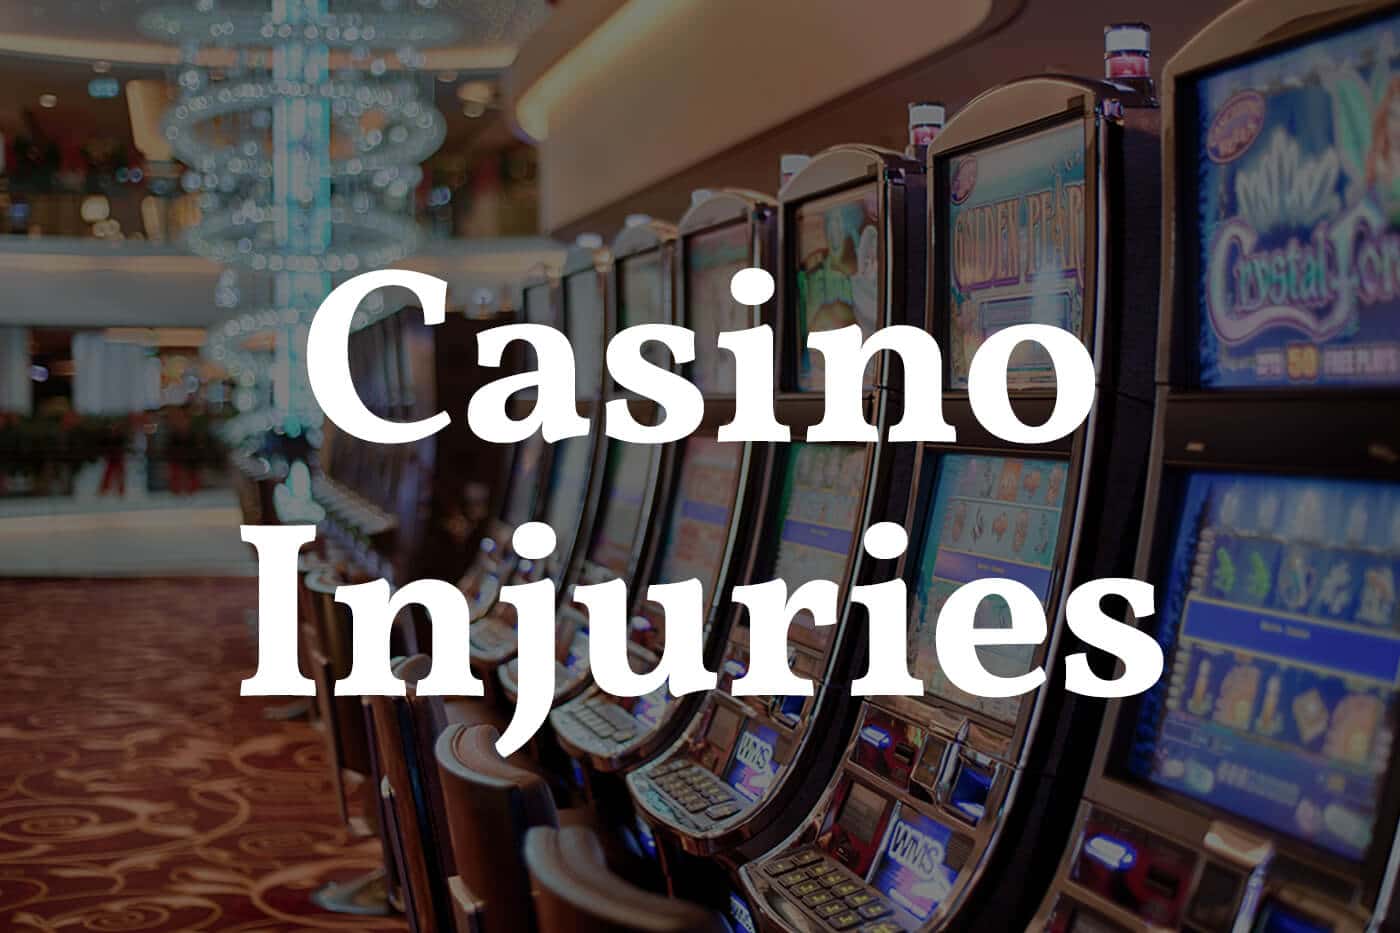 Sue casino for injury report